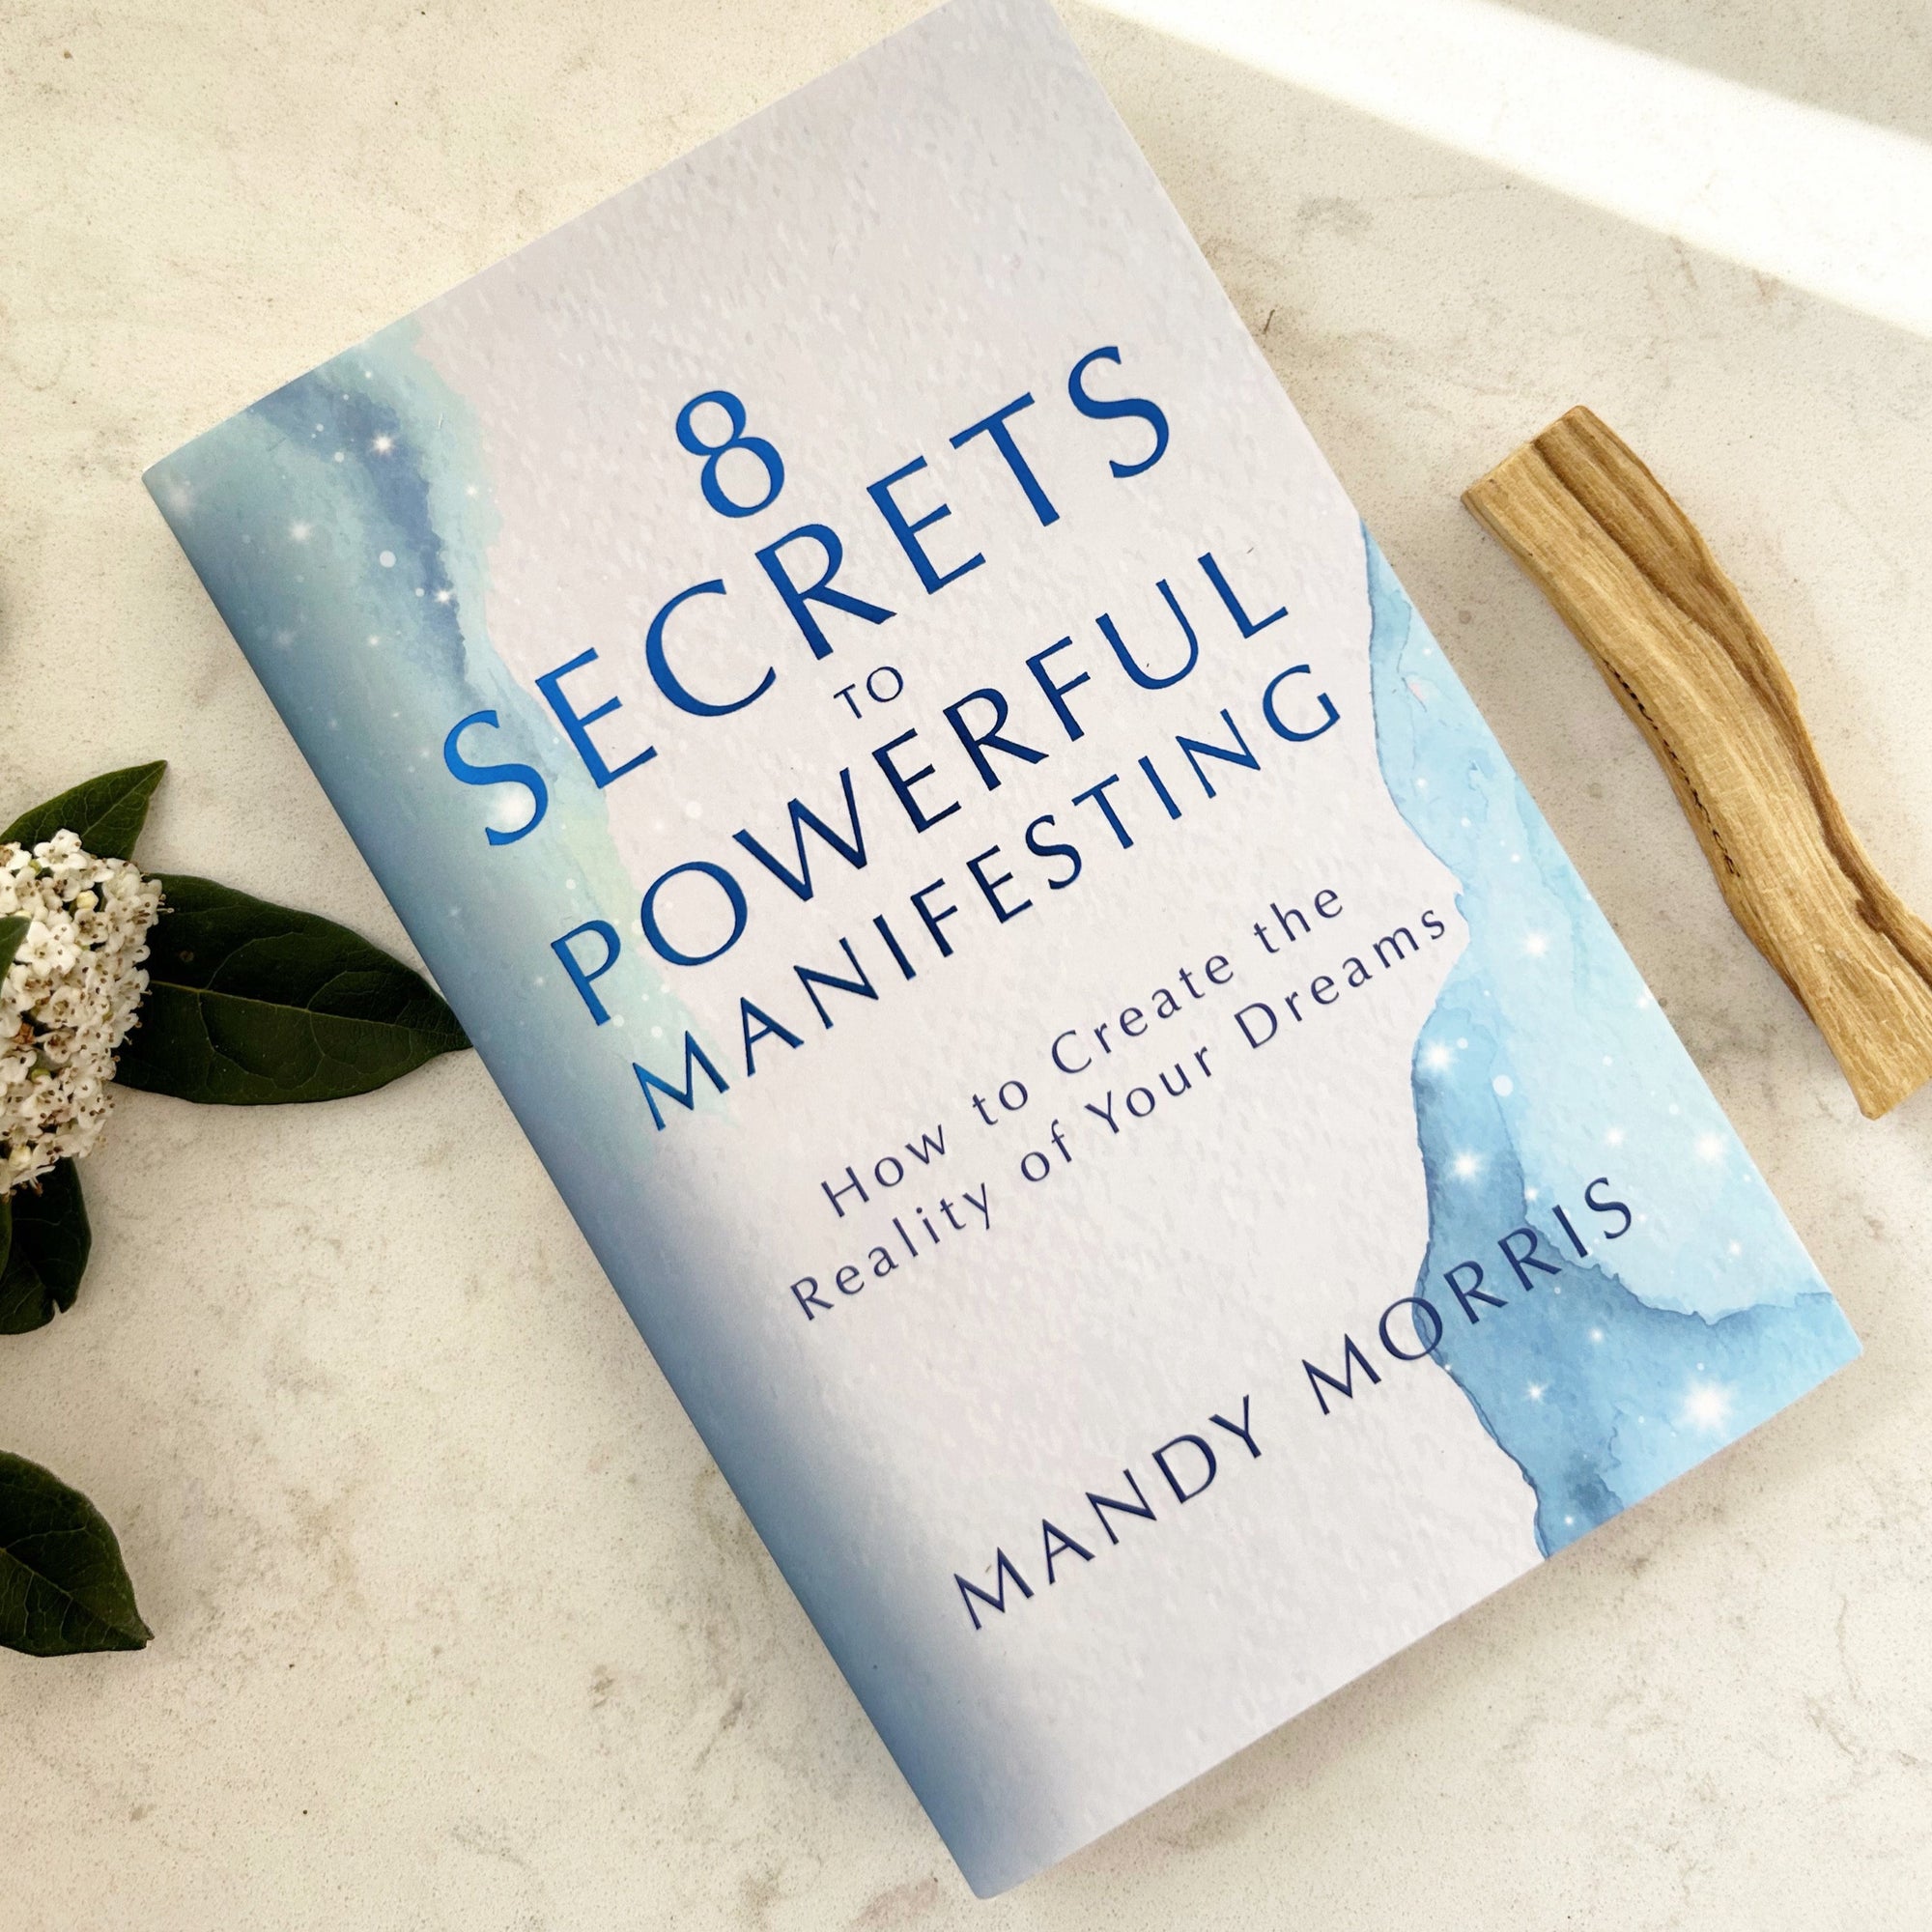 8 Secrets to Powerful Manifesting by Mandy Morris